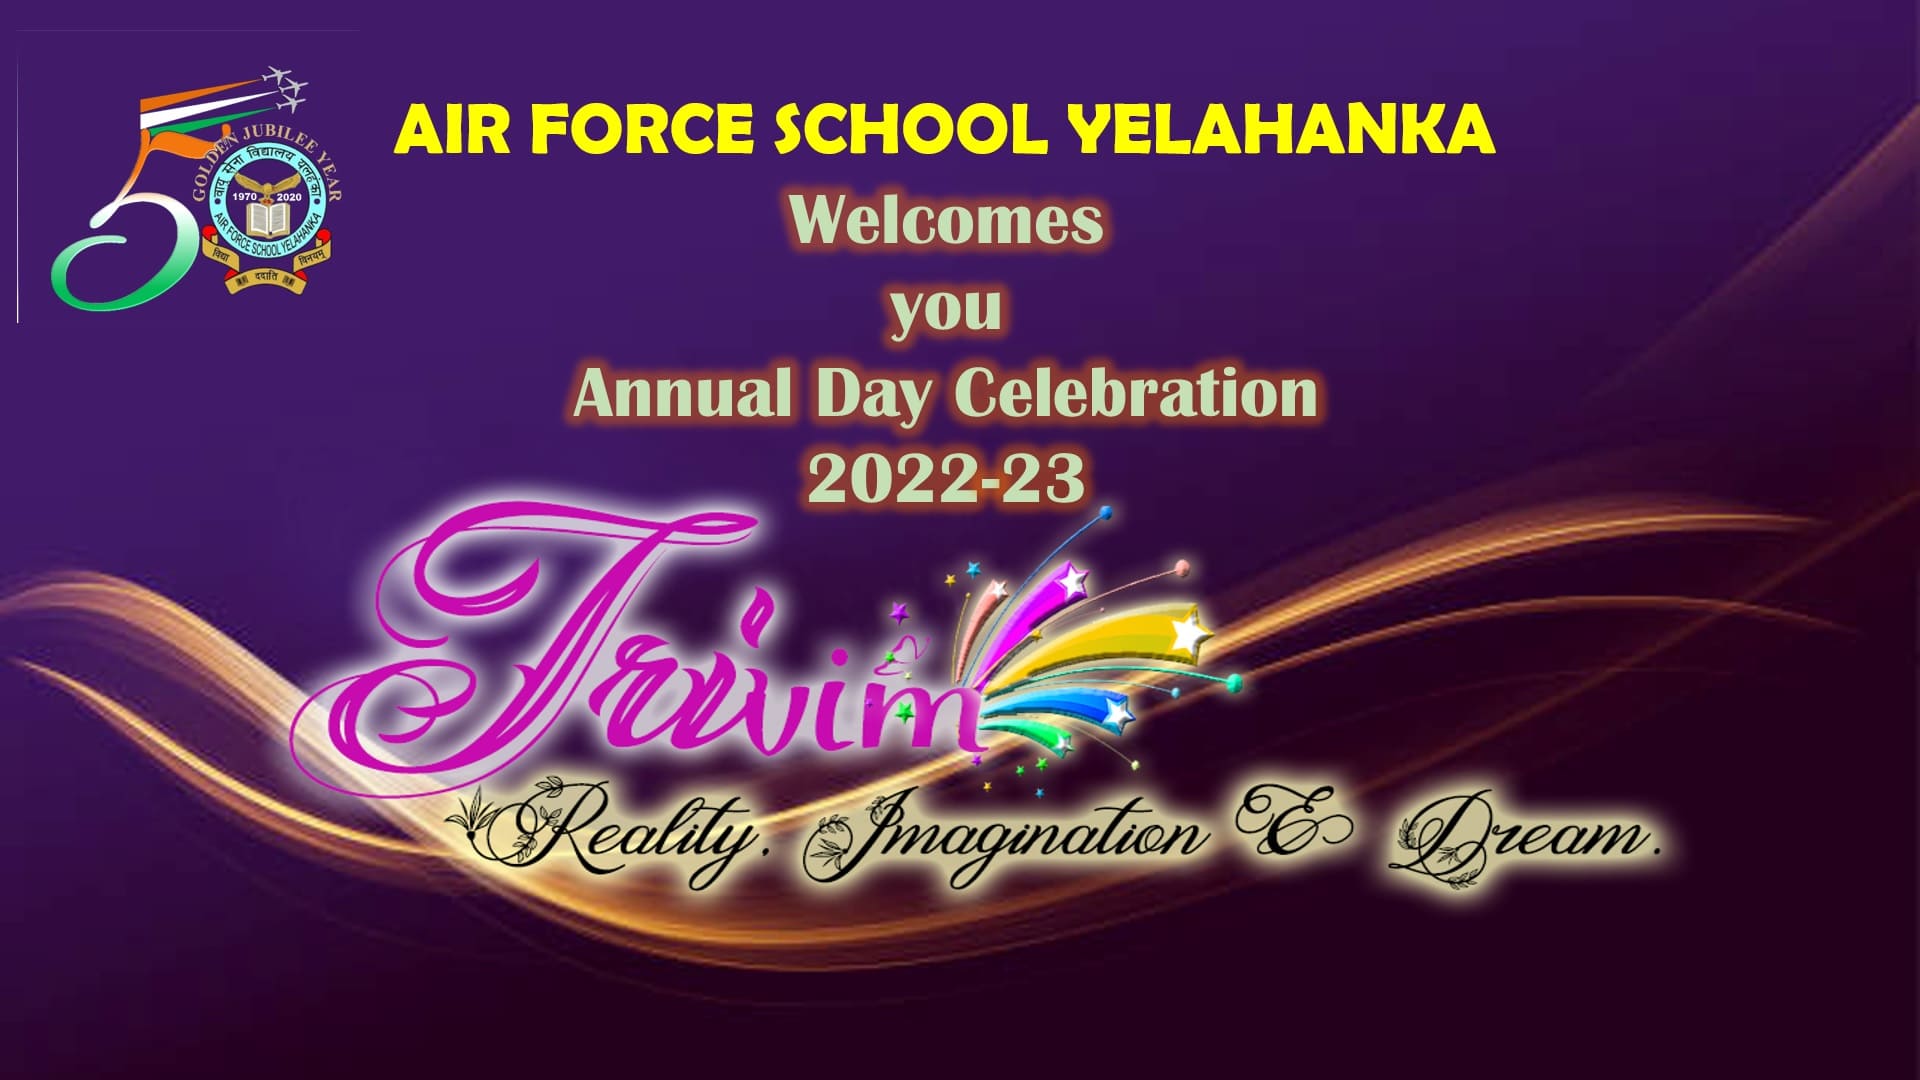 Annual Day Primary - TRIVIM - Airforce School Yelahanka